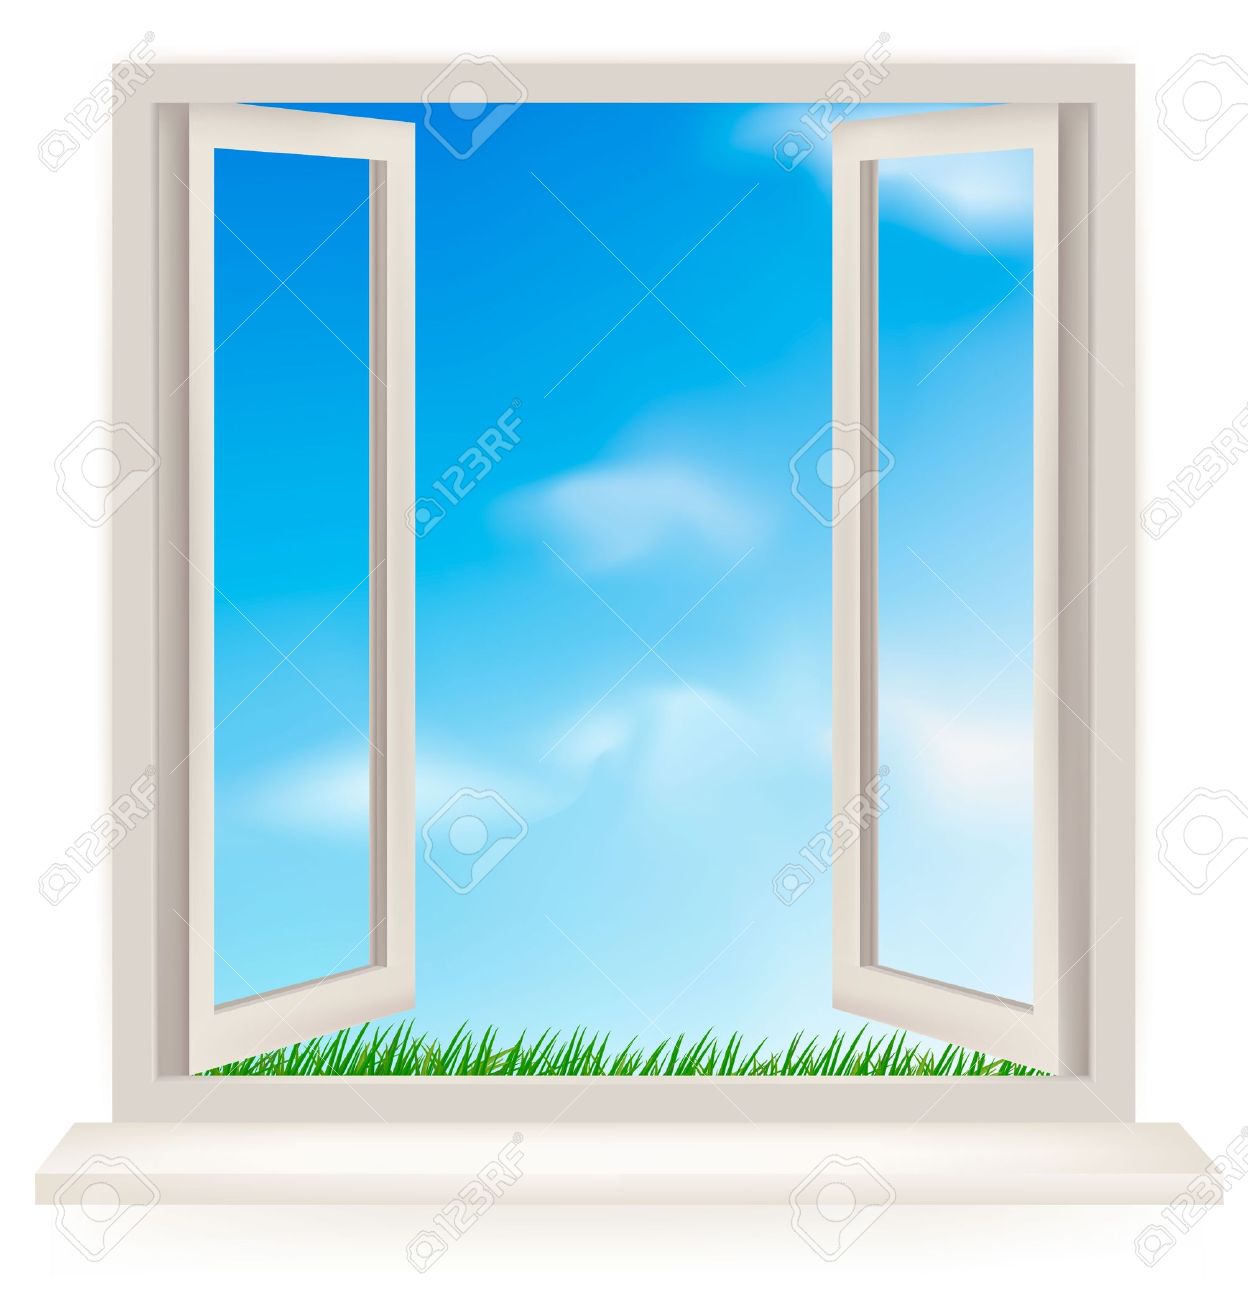 window frame clipart - photo #40